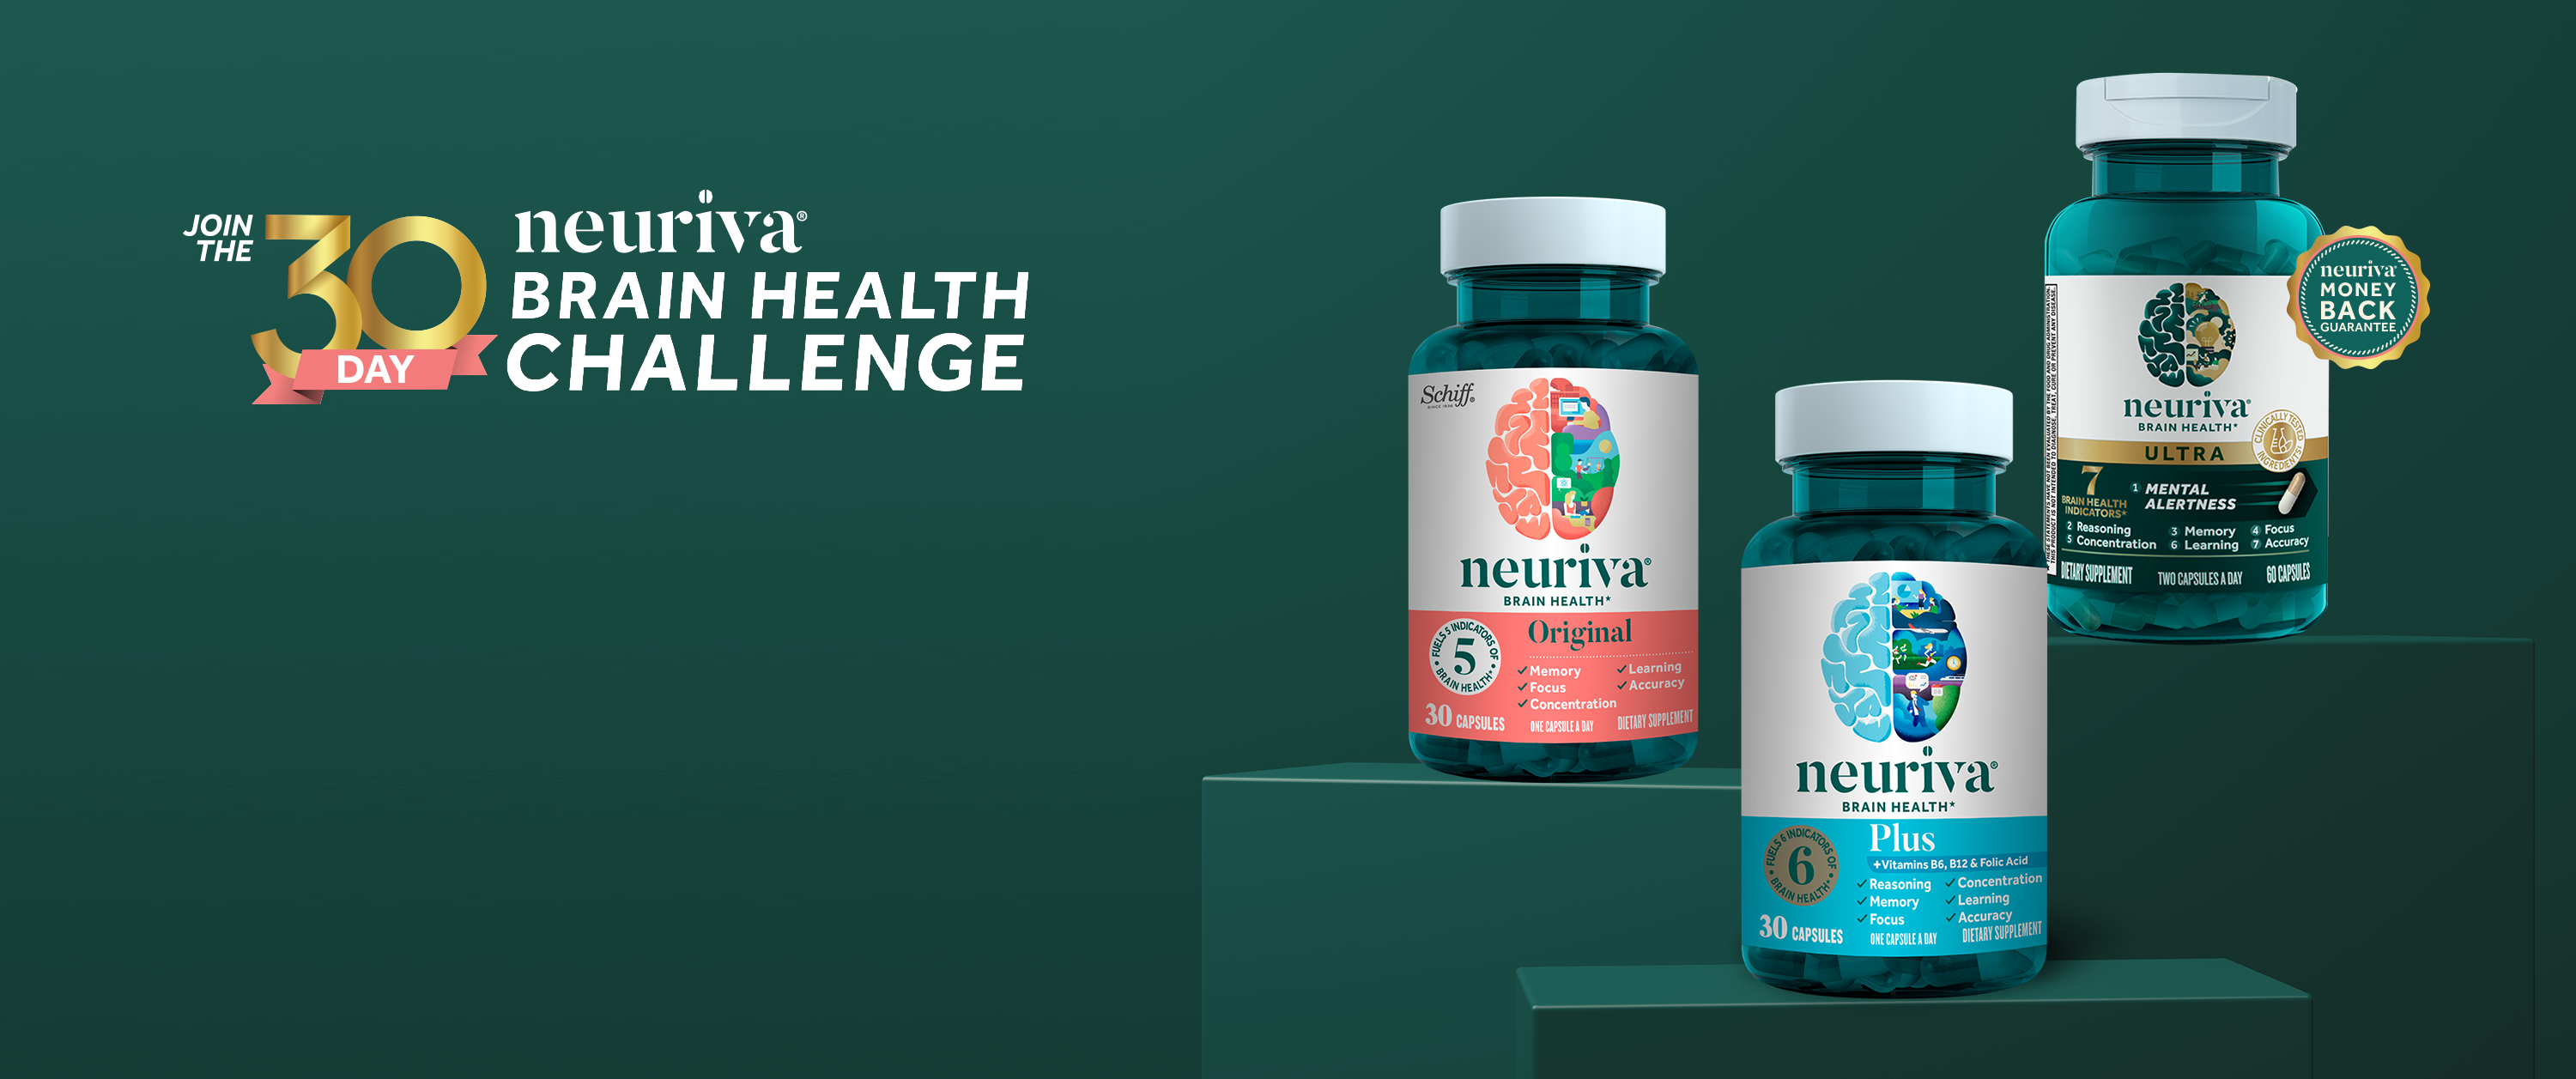 Join 30 day neuriva brain health challenge